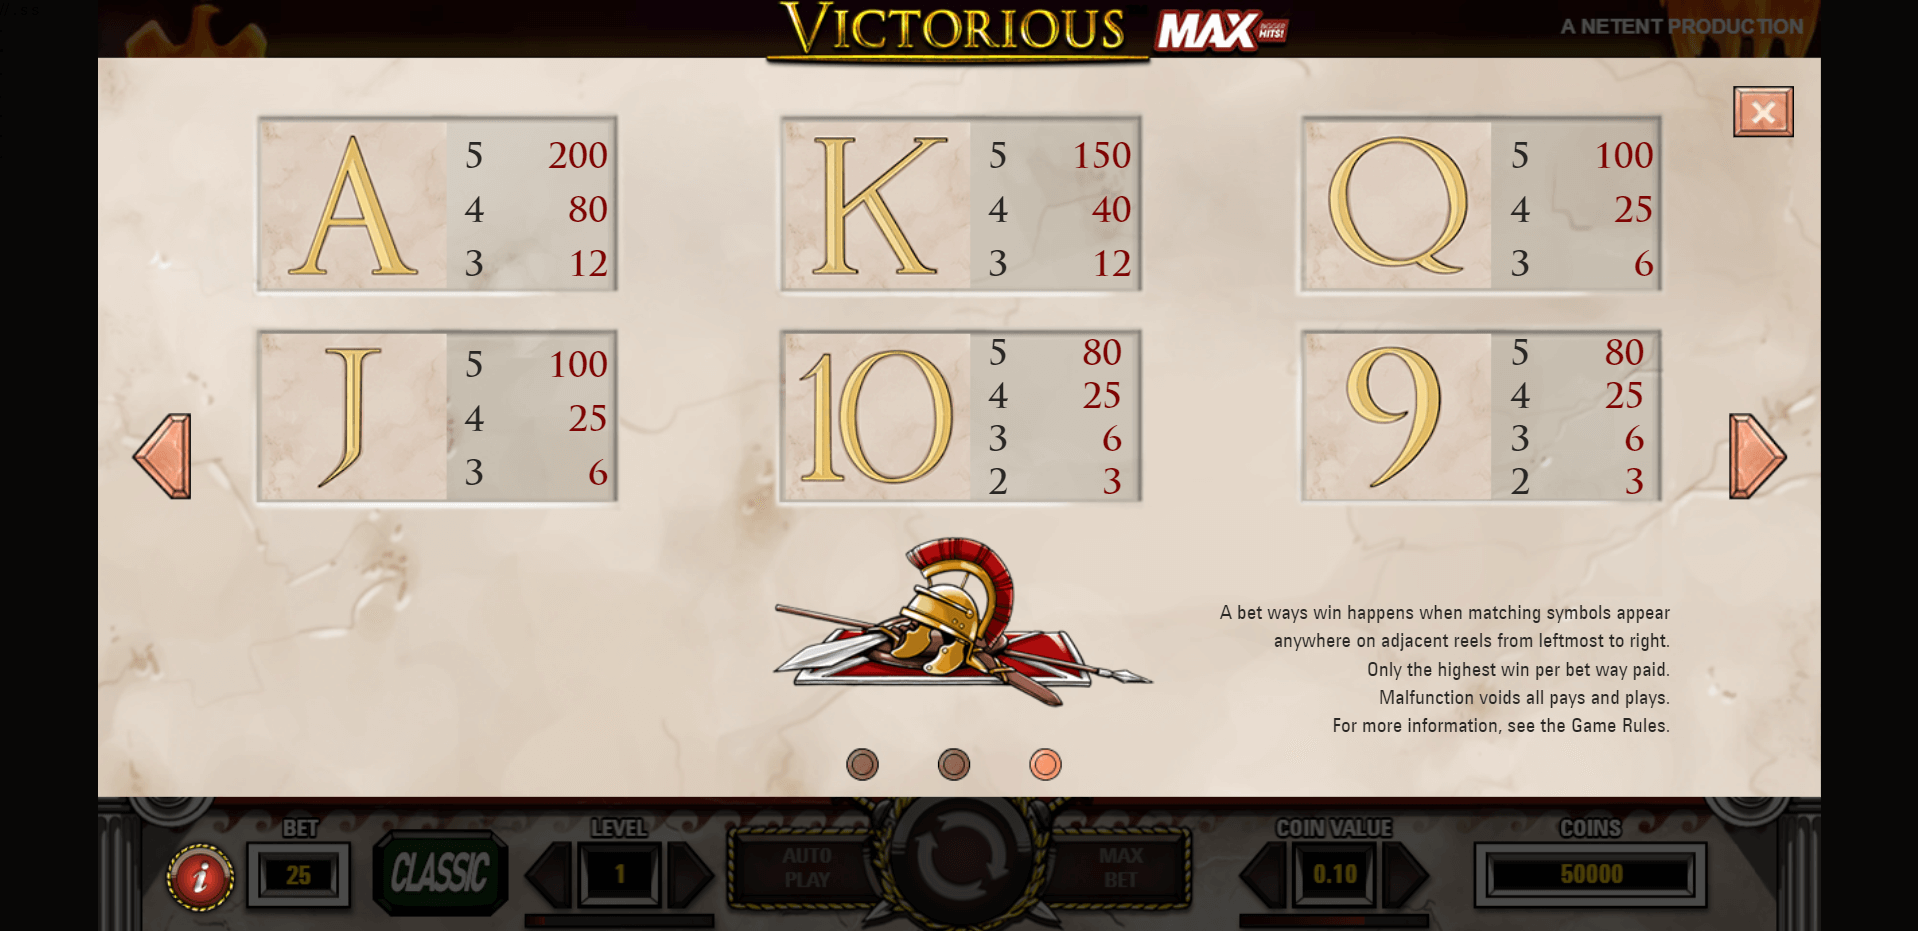 victorious max slot machine detail image 2